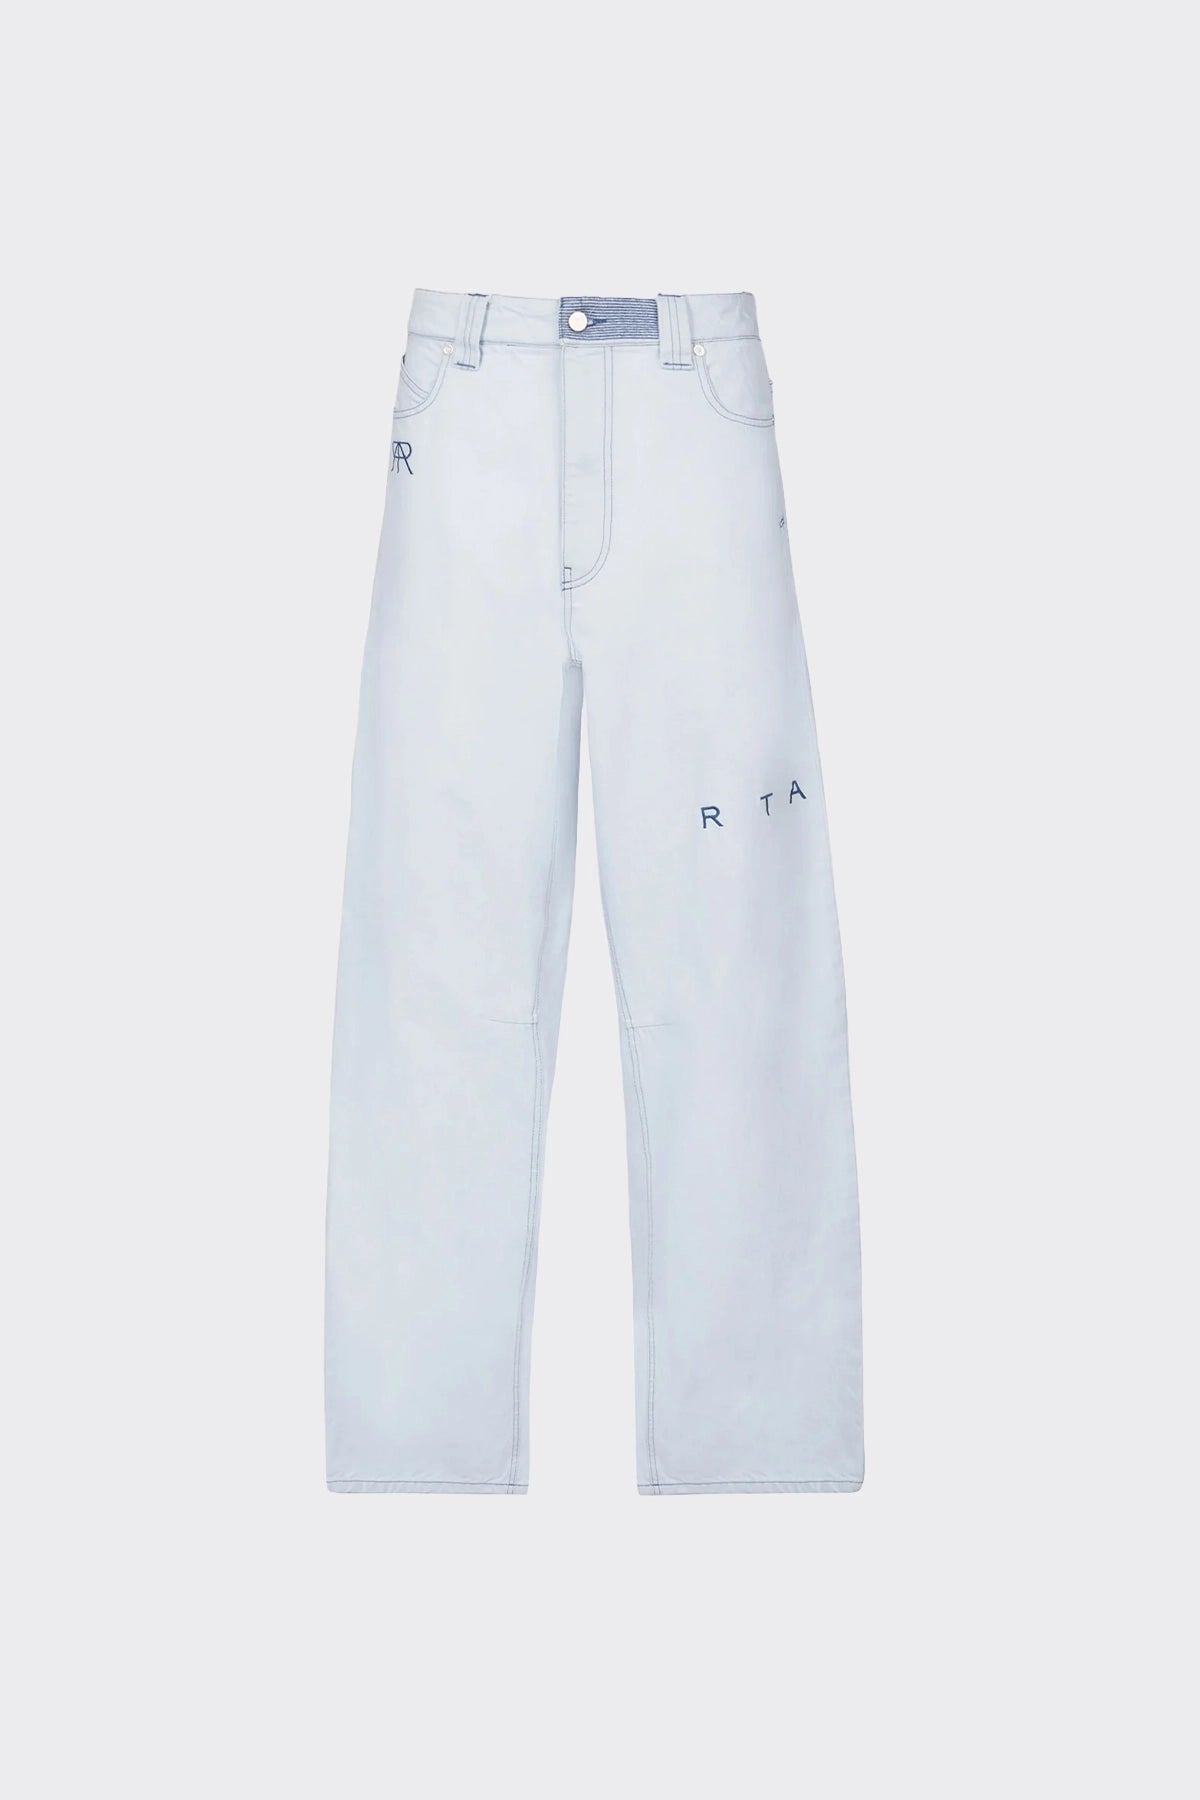 Men's Sale | Hoodies, T-Shirts, Jeans, Shorts & Sweatpants – tagged 